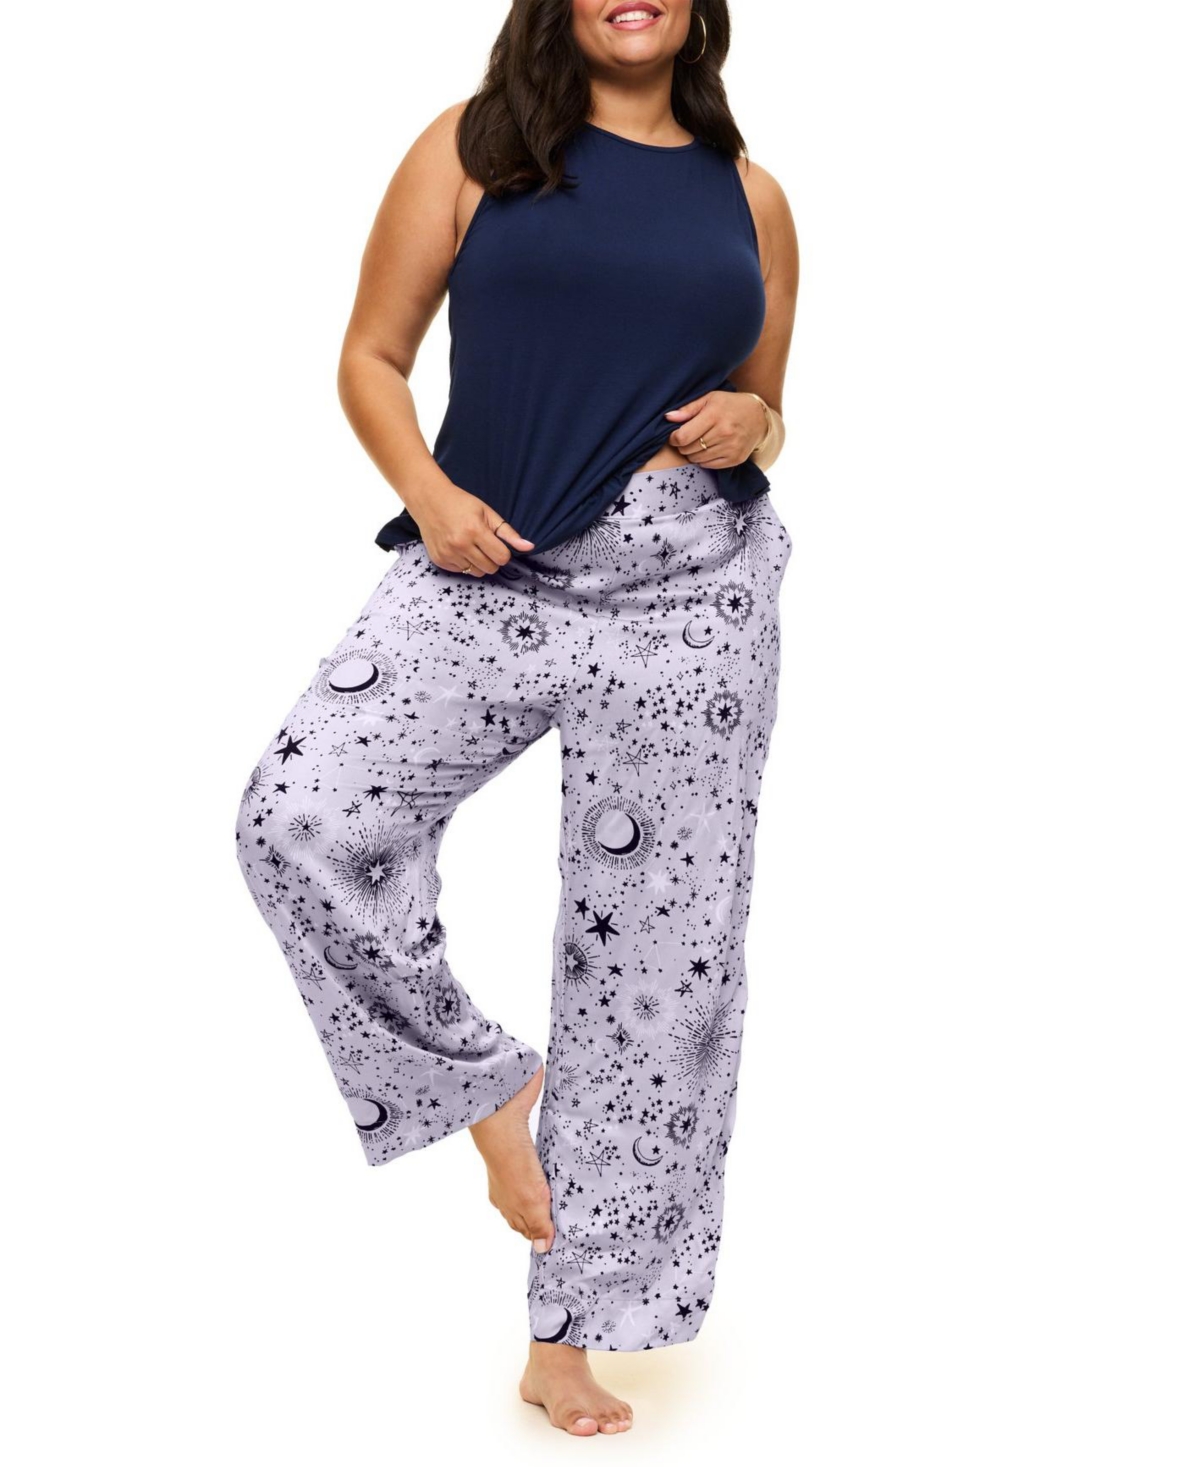 Plus Size Aerys Pajama Tank & Pants Set - Novelty purple